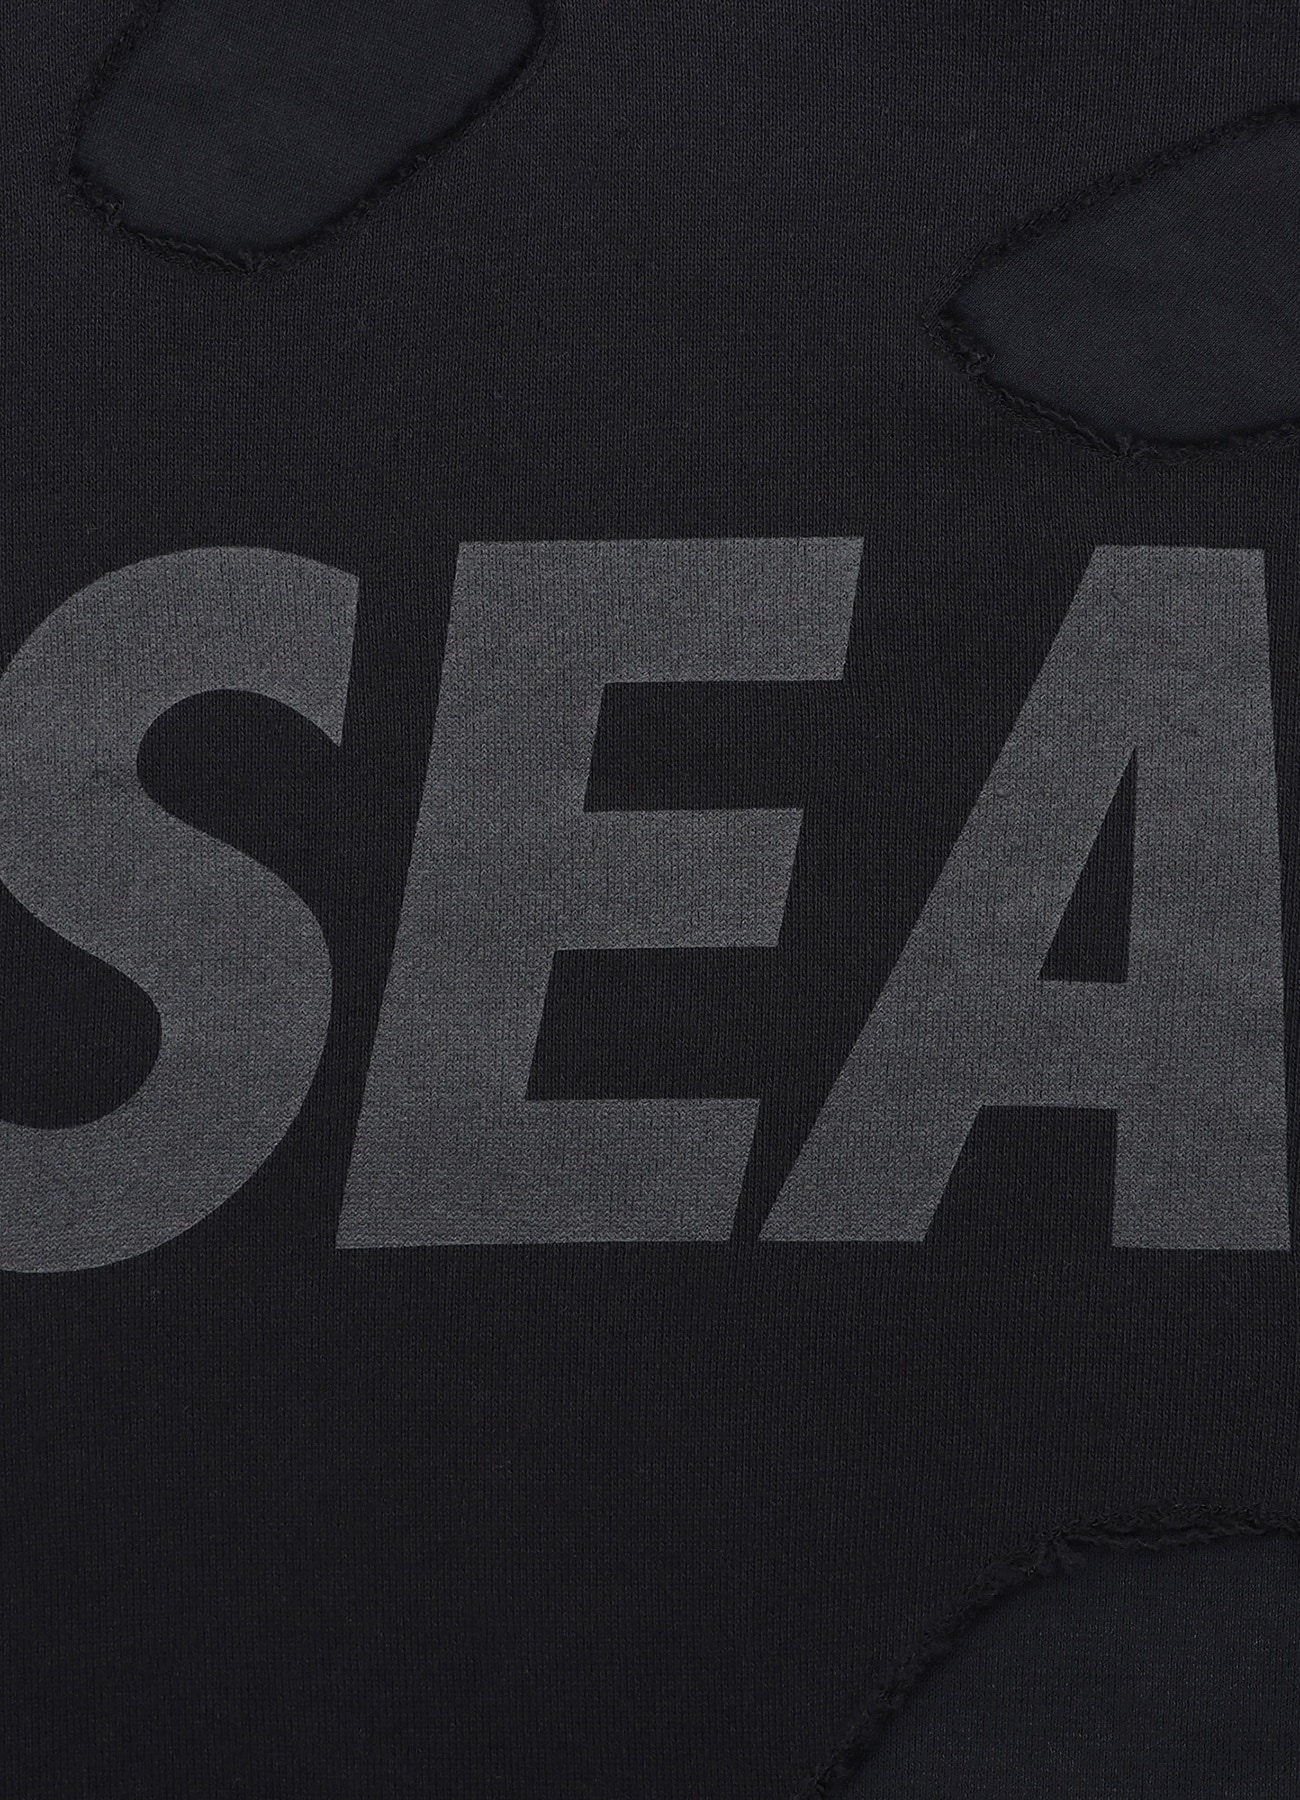 WILDSIDE × WIND AND SEA Damage Cutting Sweat Shirt(S BLACK): WIND